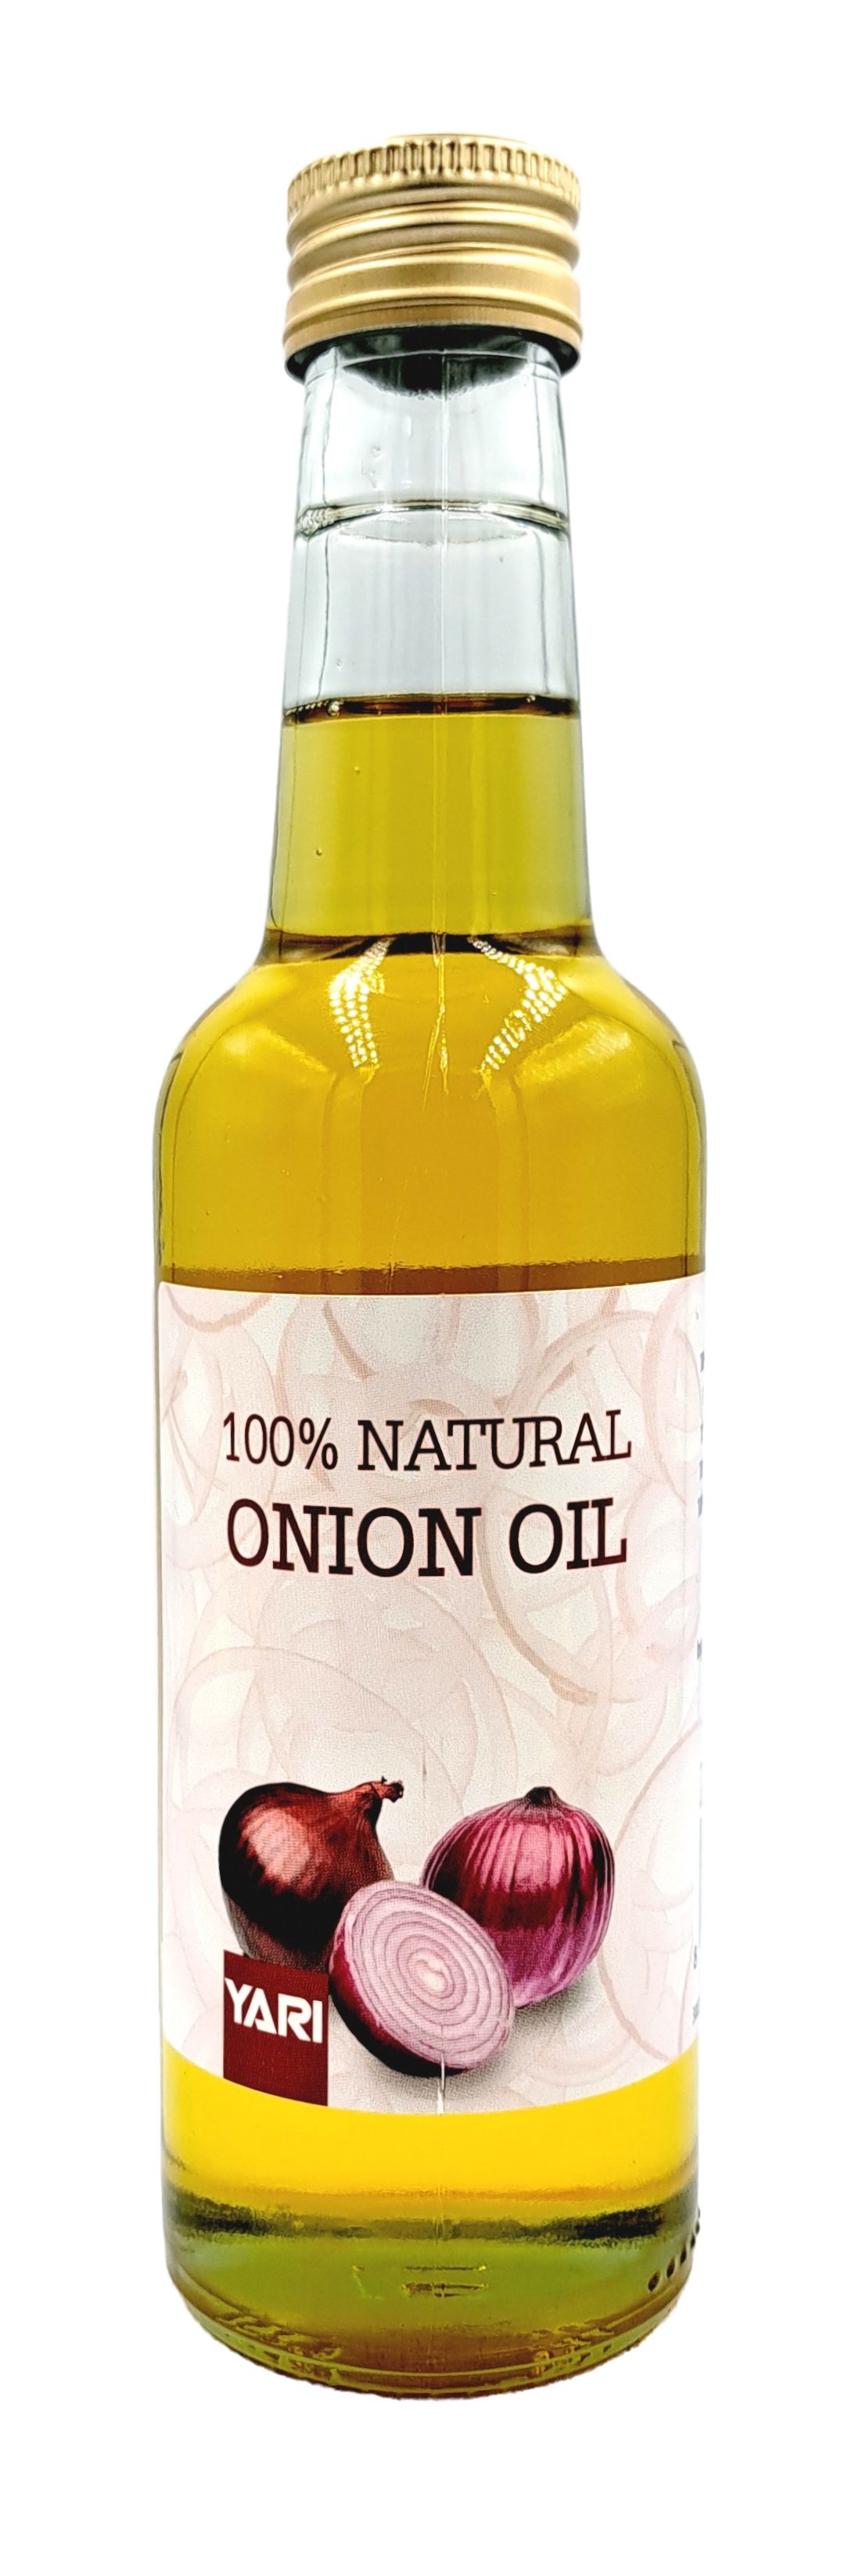 Haaröl 100% Natural Onion 250ml, 1, Yari Yari 1-tlg. Oil Zwiebelöl -